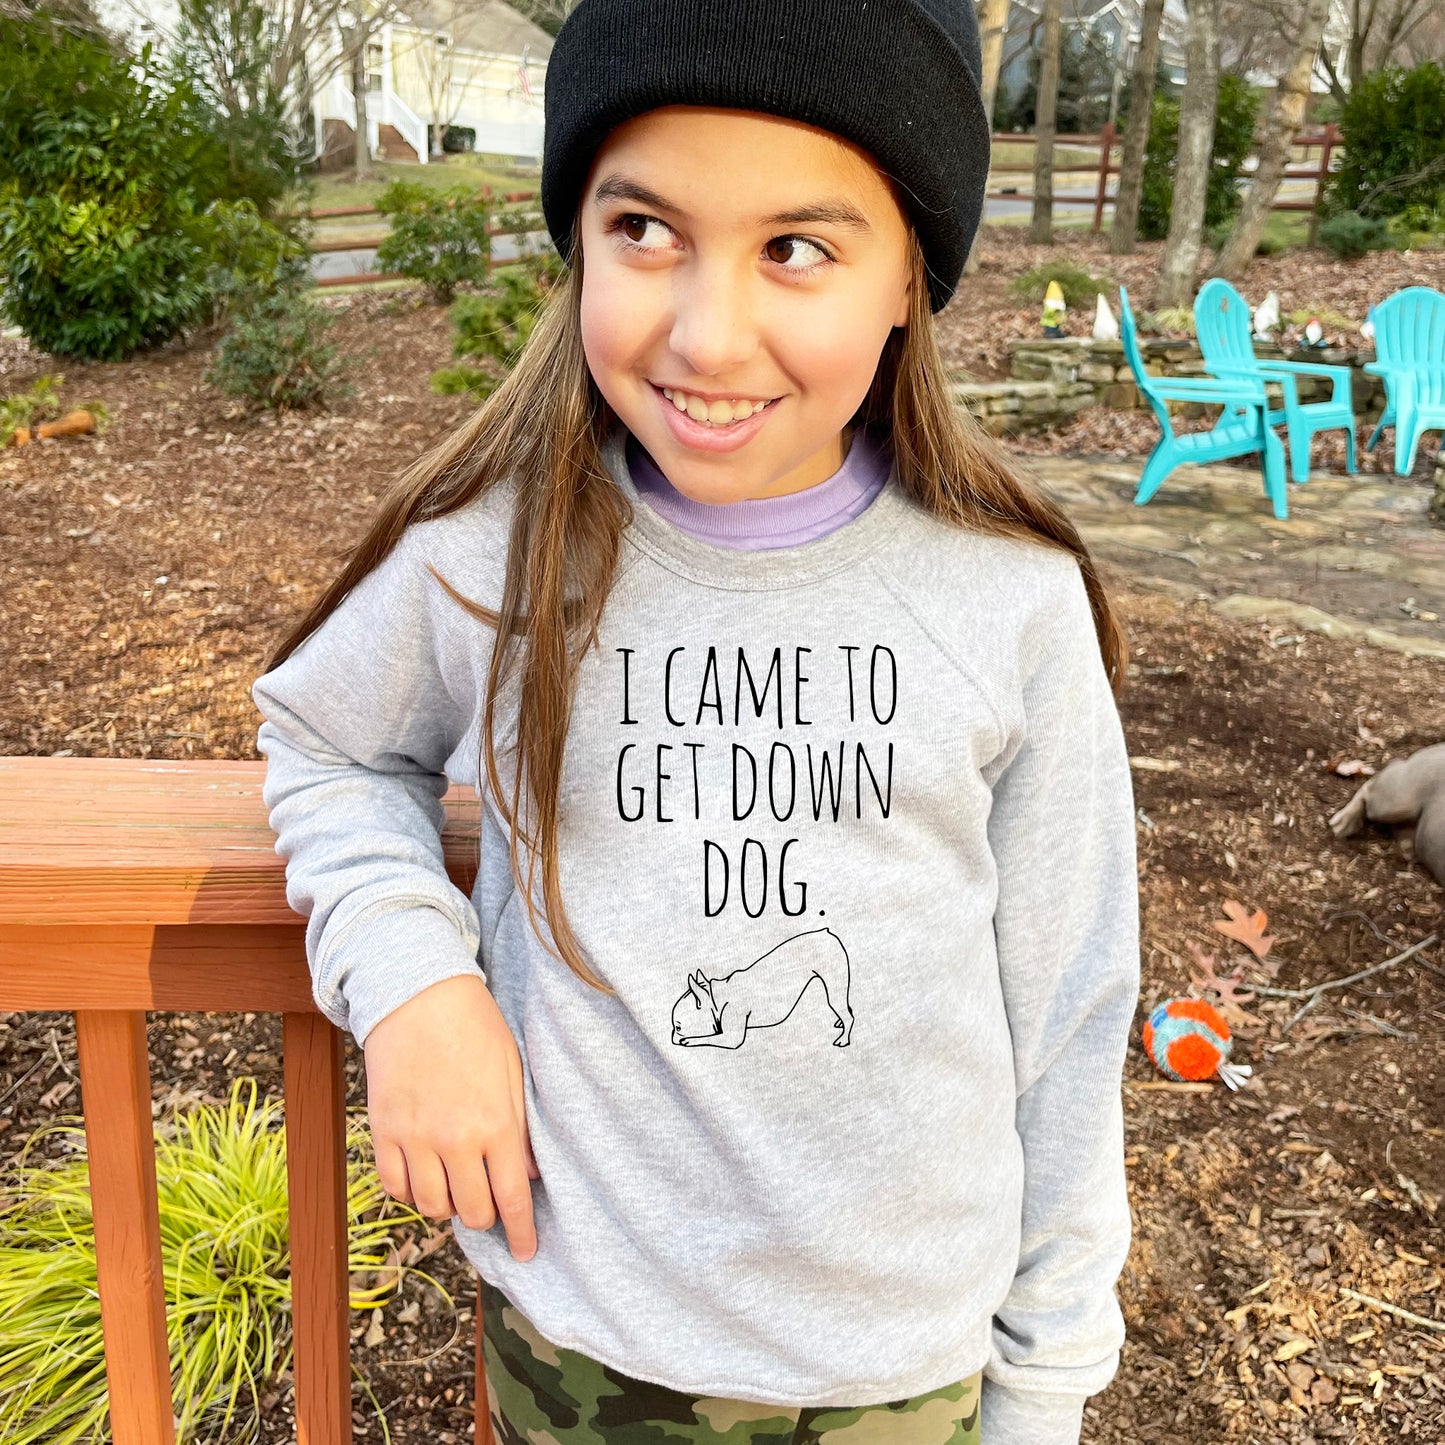 I Came To Get Down Dog (Yoga/ French Bulldog) - Kid's Sweatshirt - Heather Gray or Mauve